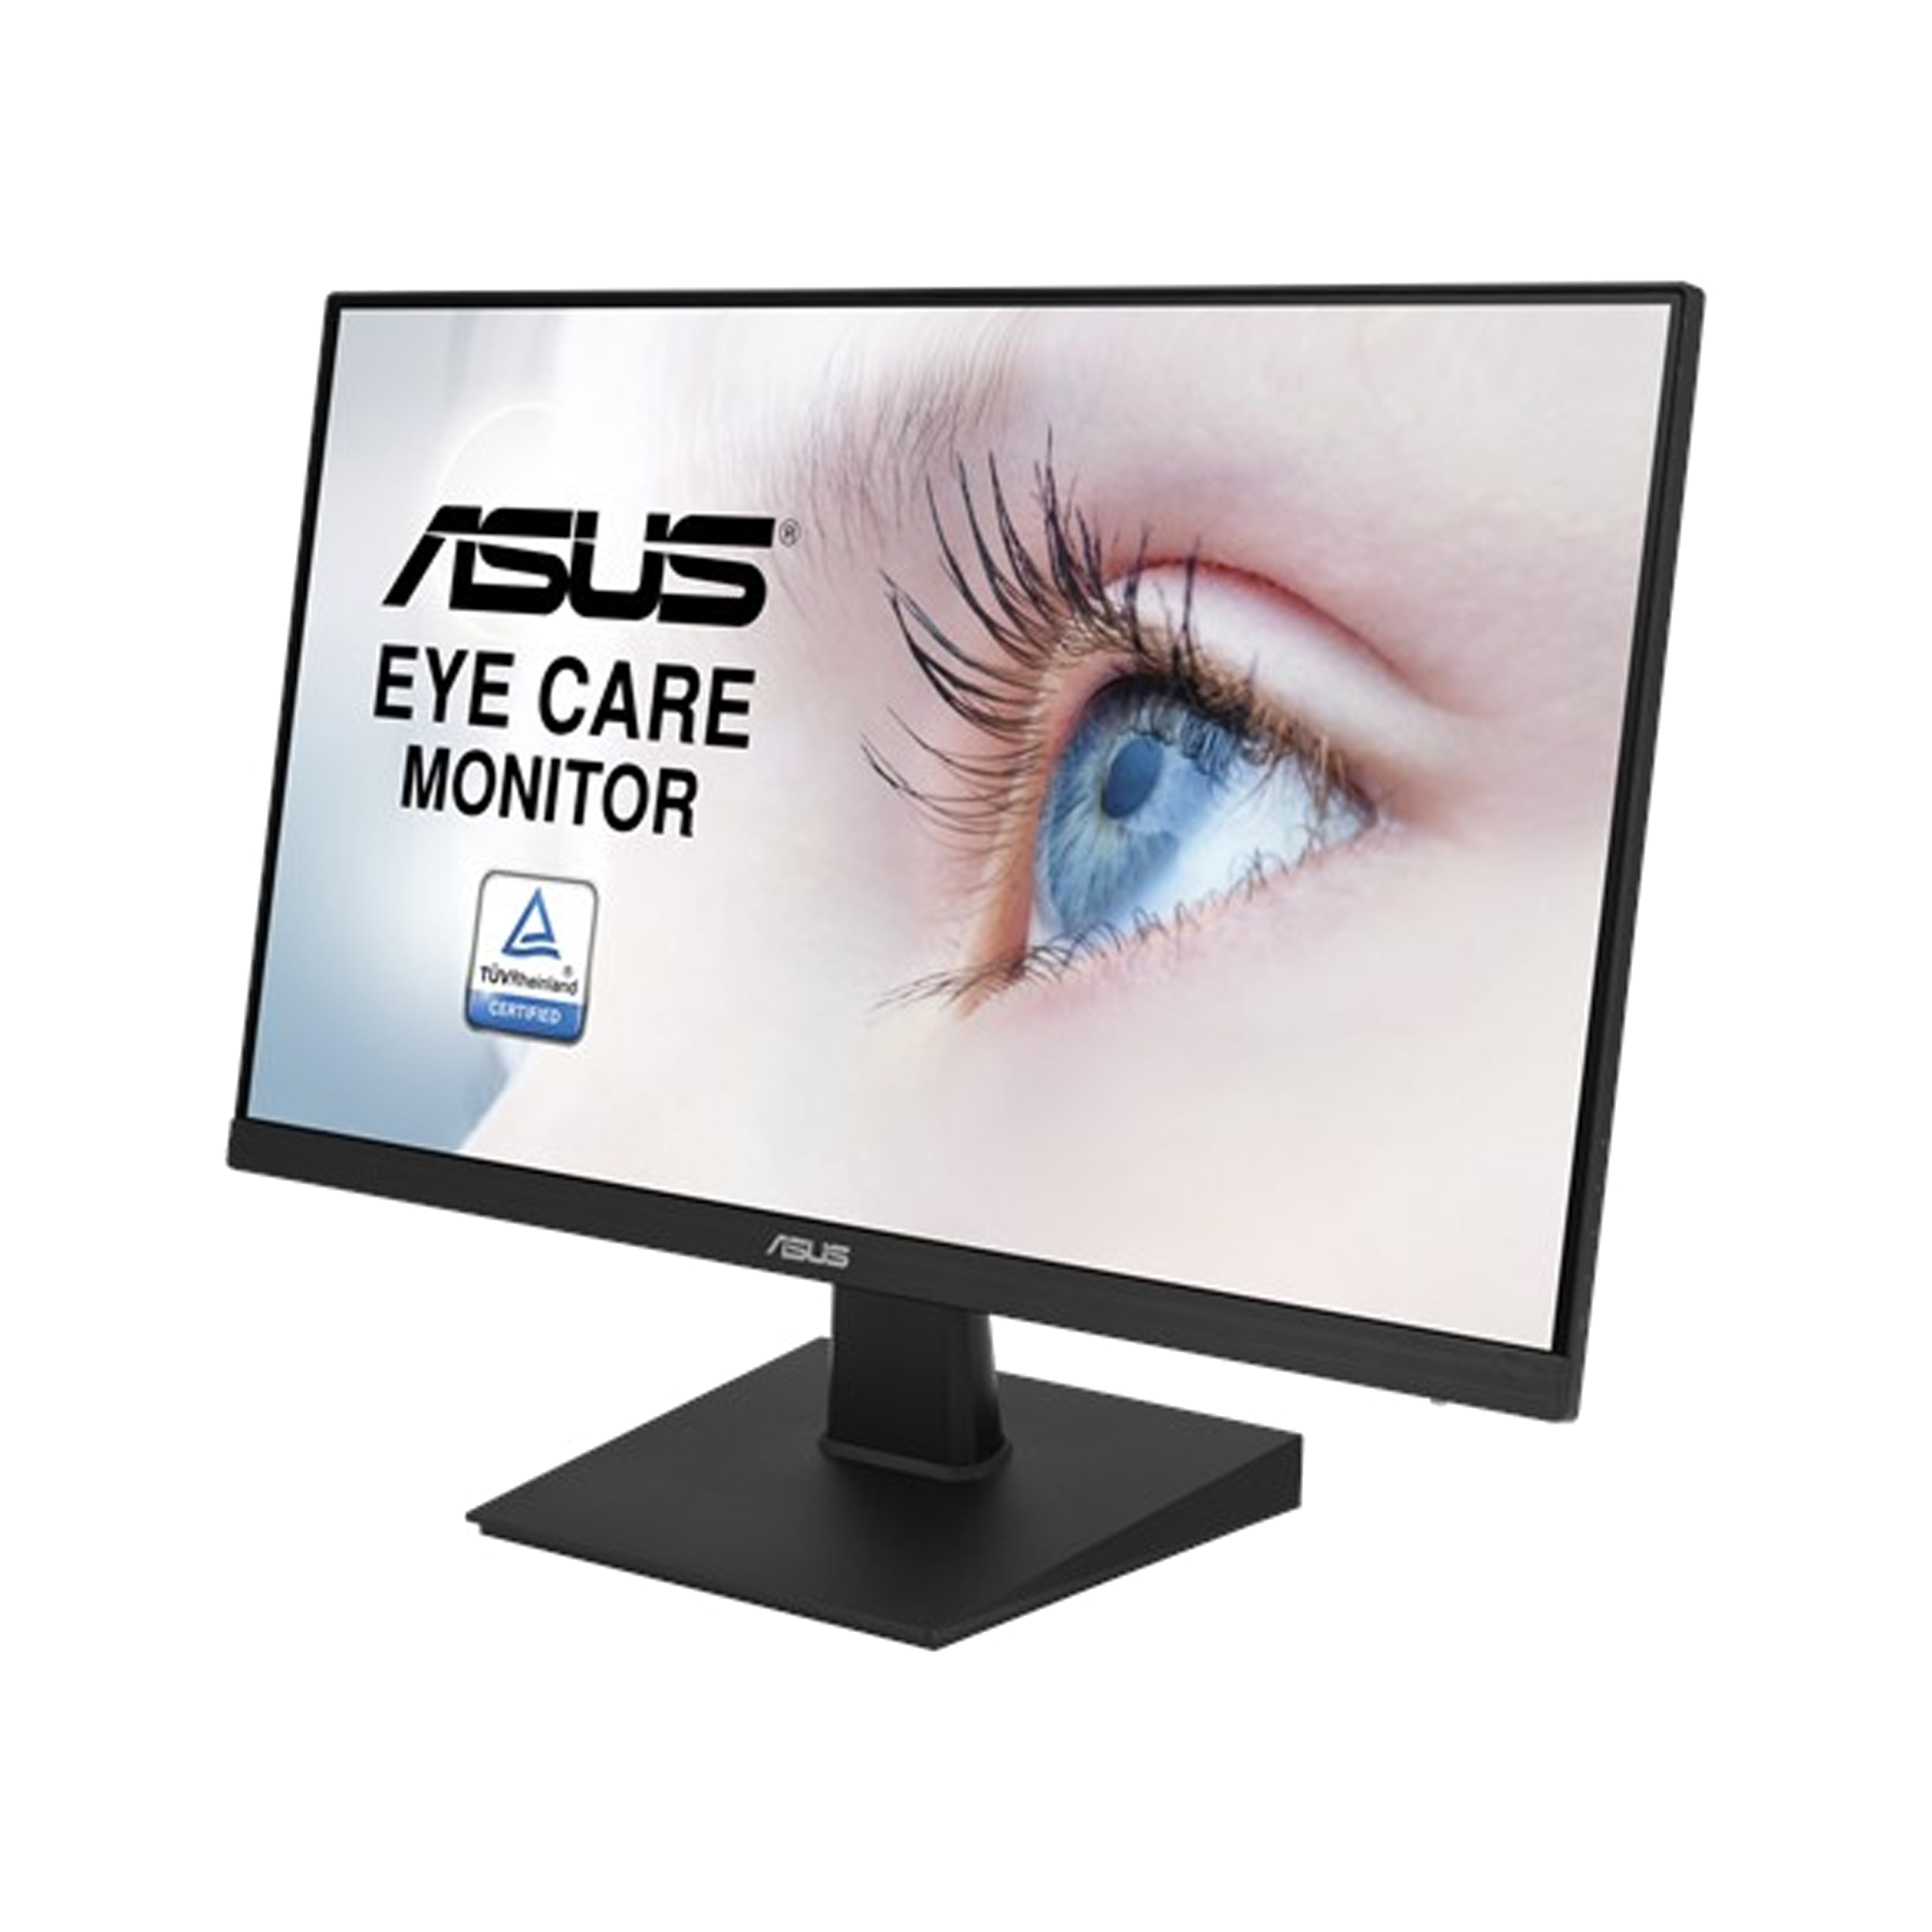 H7514 Speed CSL Vision CSL PC - | Computer